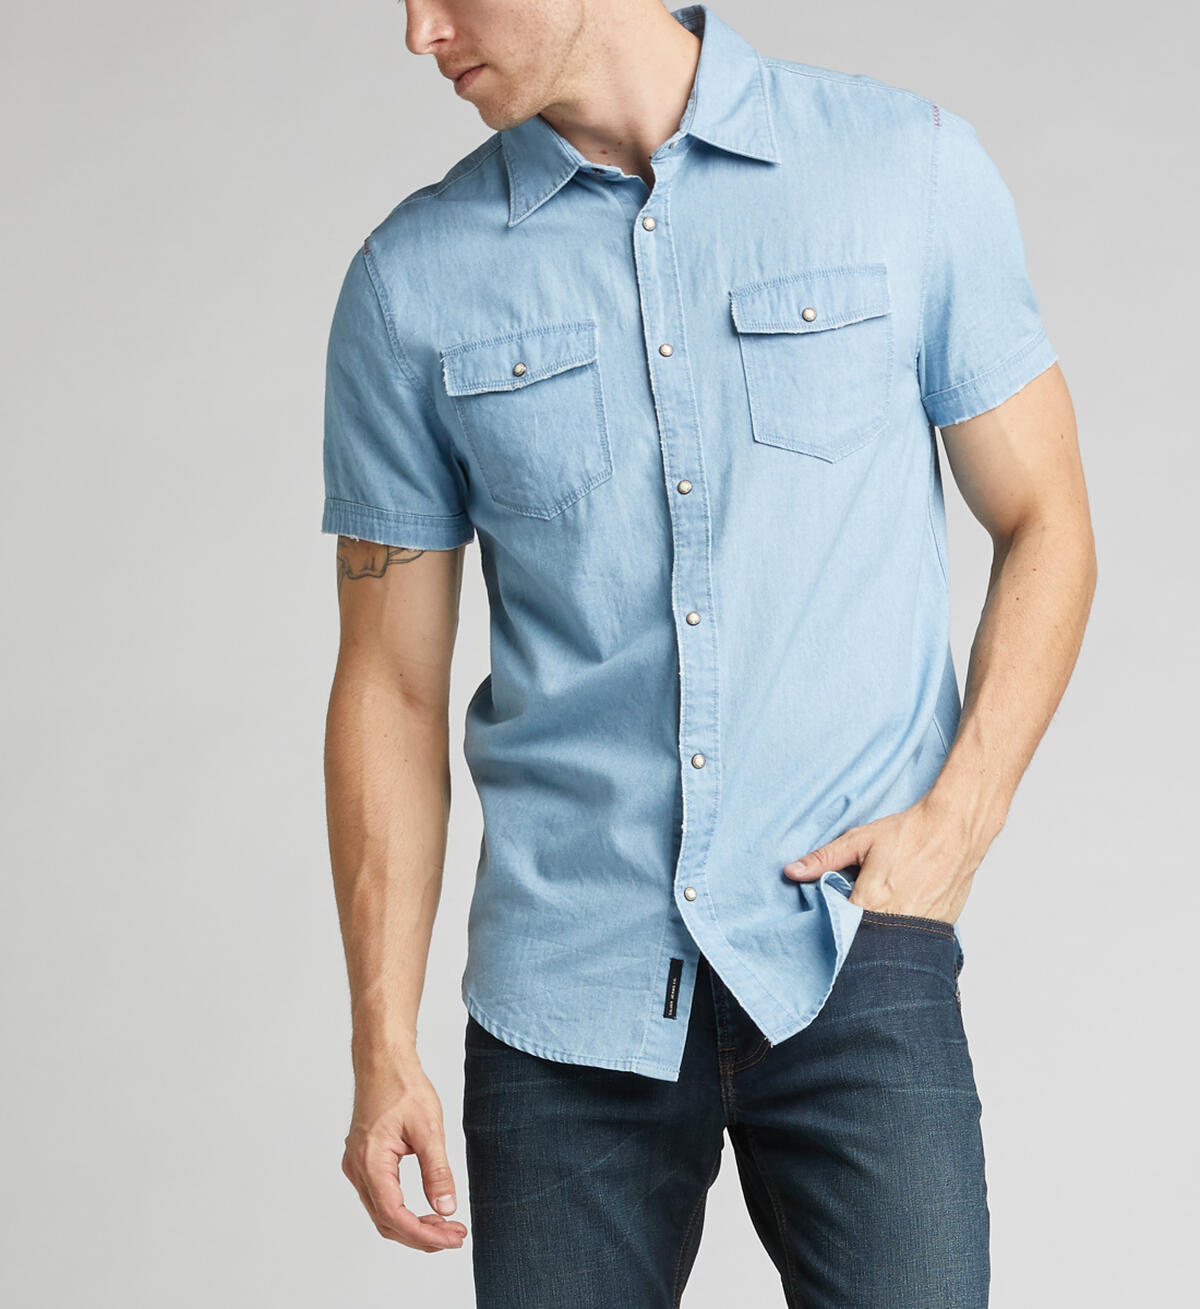 Calden Short-Sleeve Classic Shirt, , hi-res image number 0